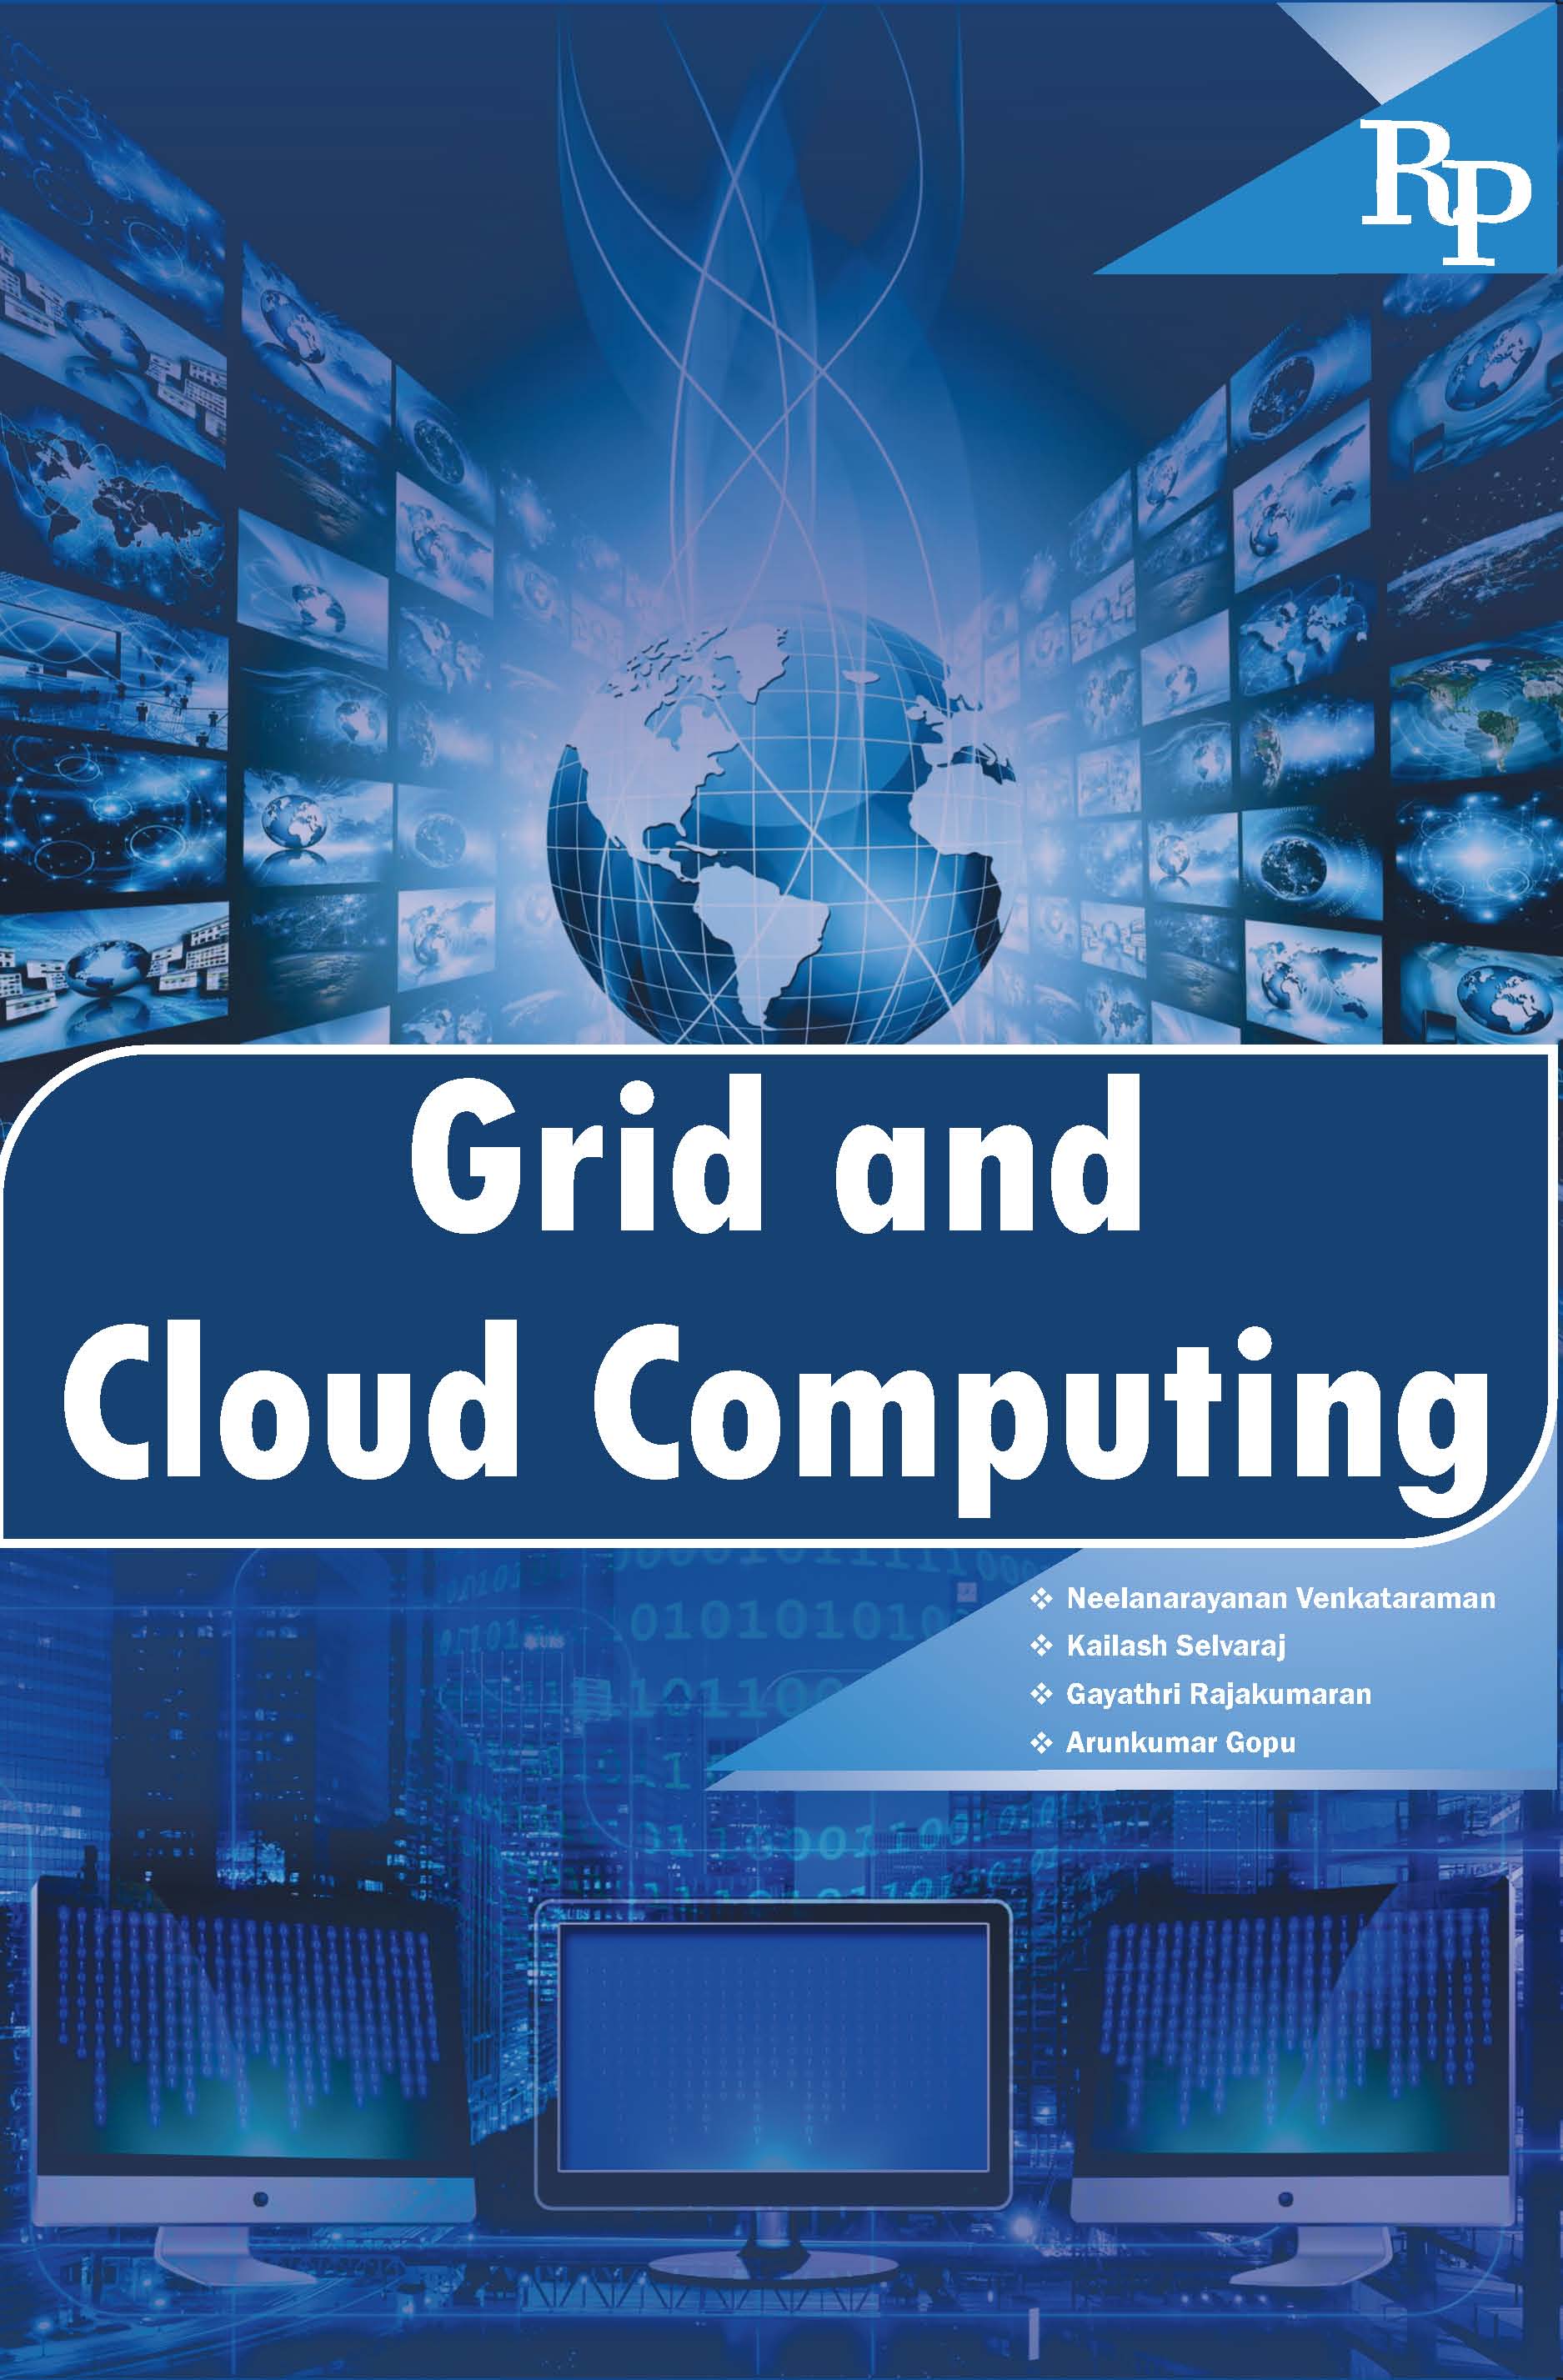 Grid and Cloud Computing.jpg